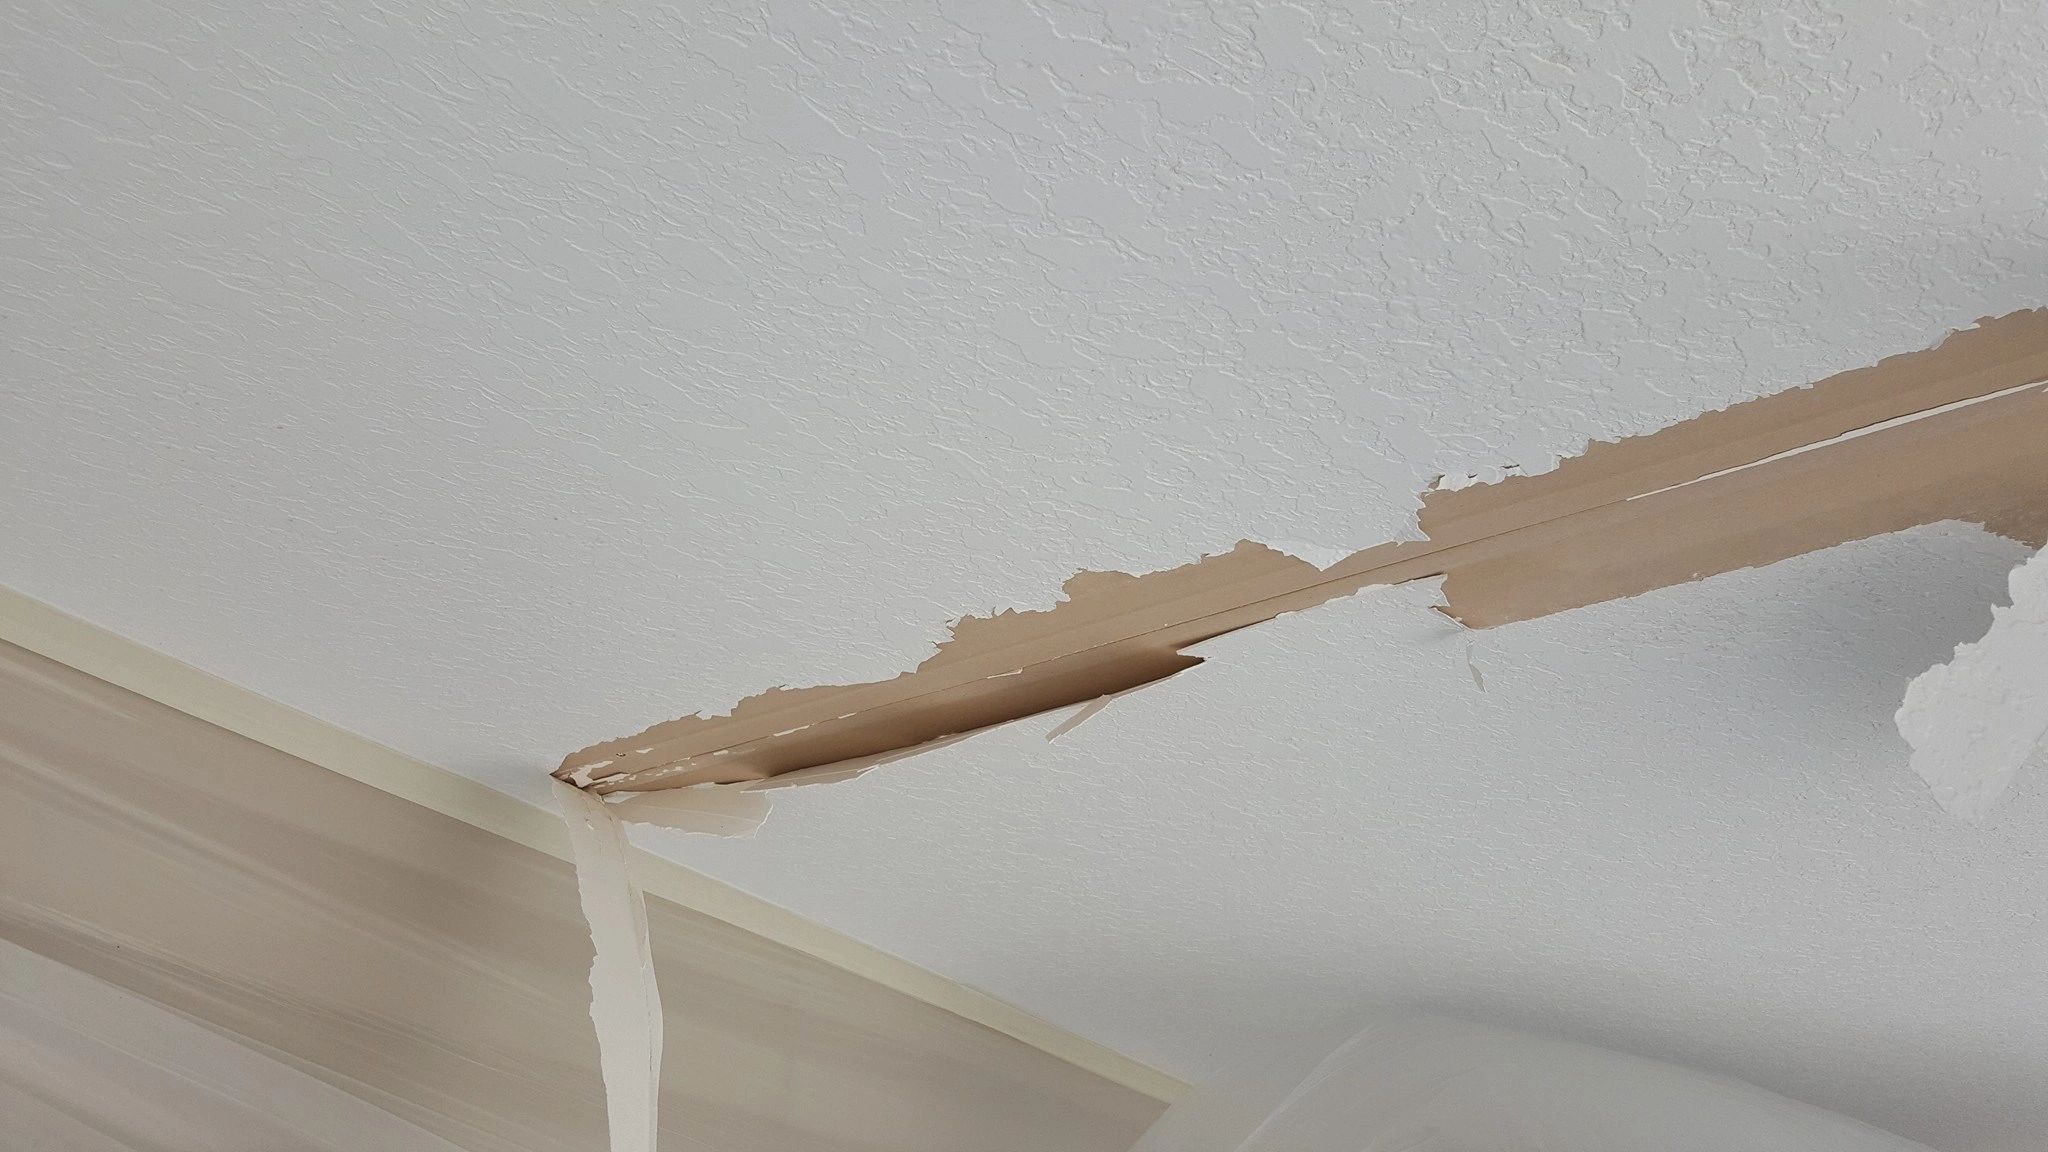 How to repair peeling drywall tape - Home Improvement Stack Exchange